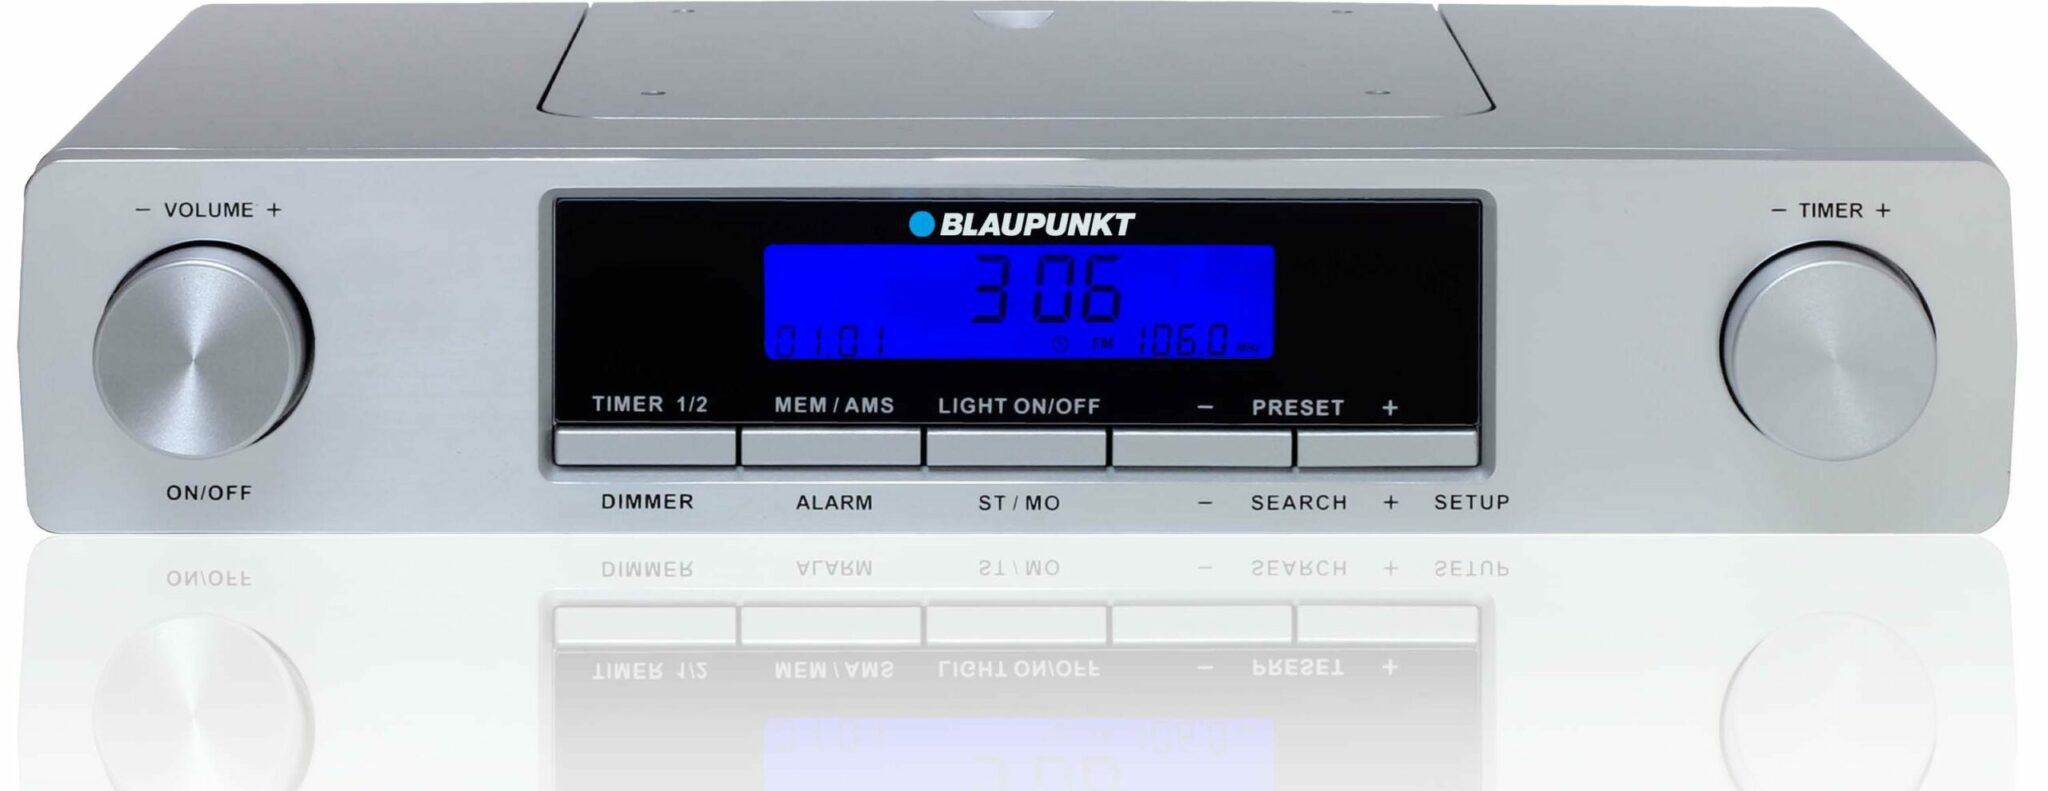 marble Cut off refrigerator Radio Blaupunkt KR12SL, FM, PLL, alarma ceas, display LCD, iluminare LED, 2  x 0.8W RMS, accesorii montaj | Carrefour Romania